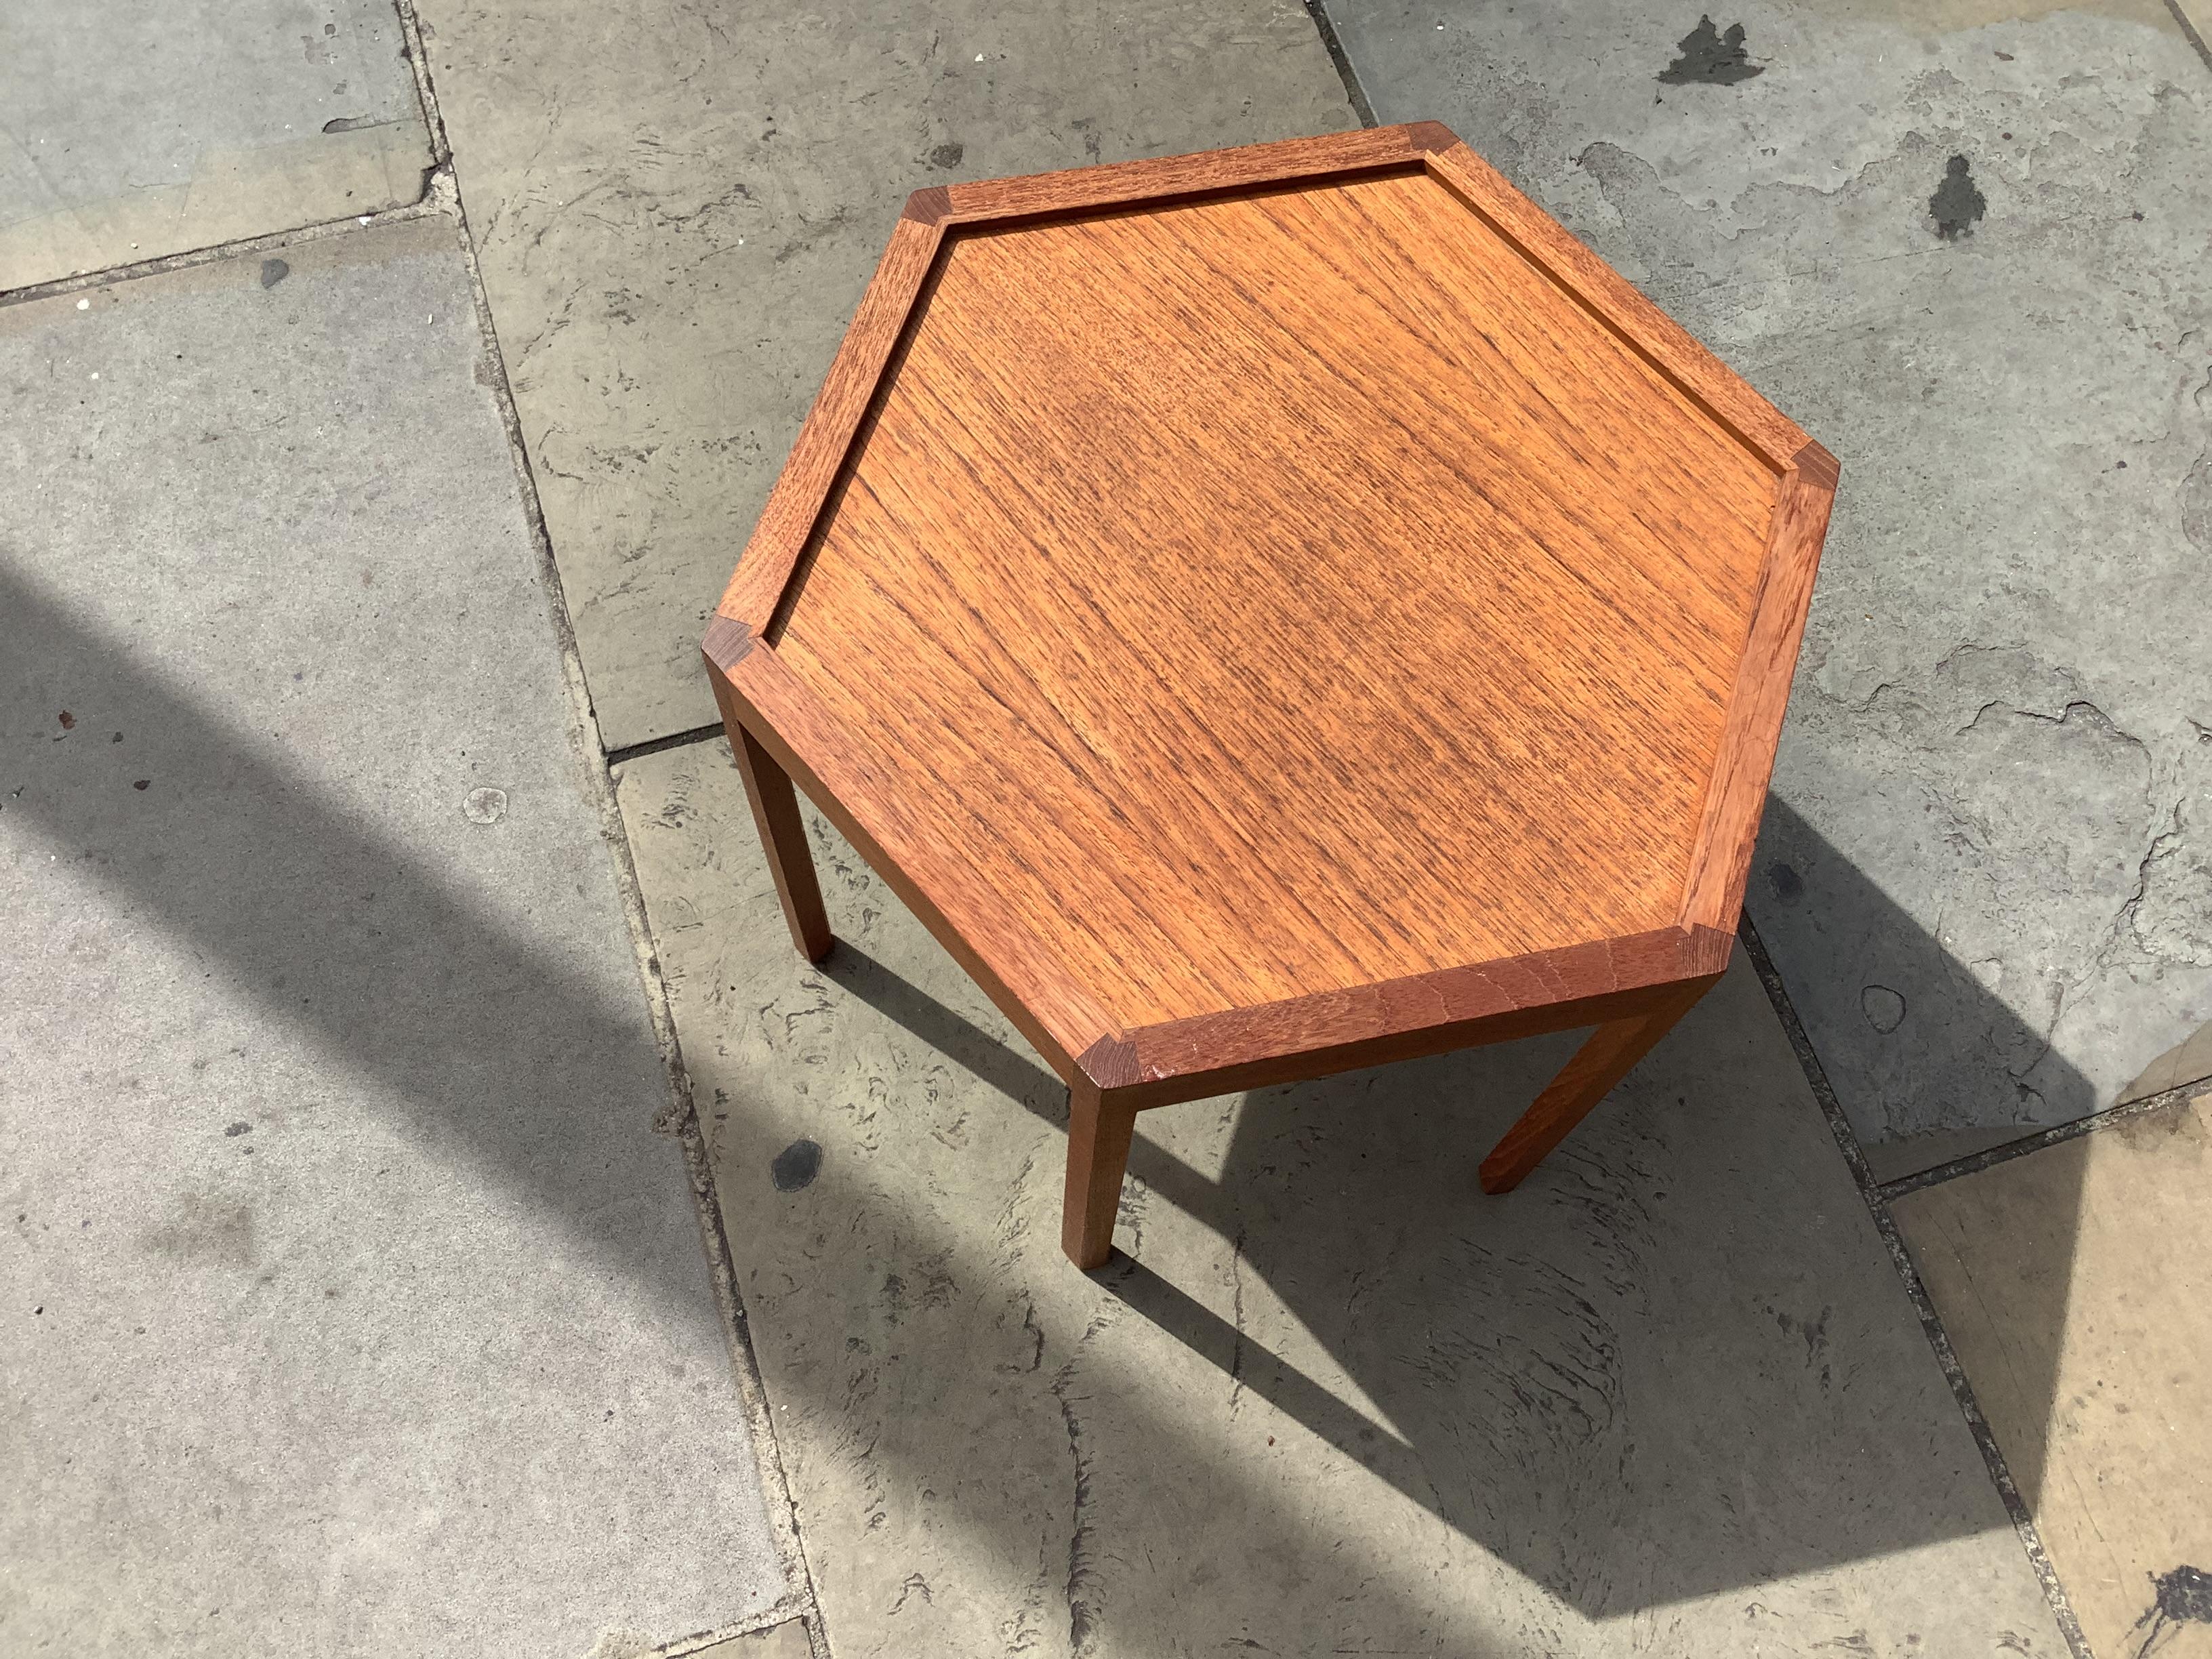 Beautiful side table in teak and oak hexagonal shape 
Designed by Hans  Christiansen Adersen

For Artex